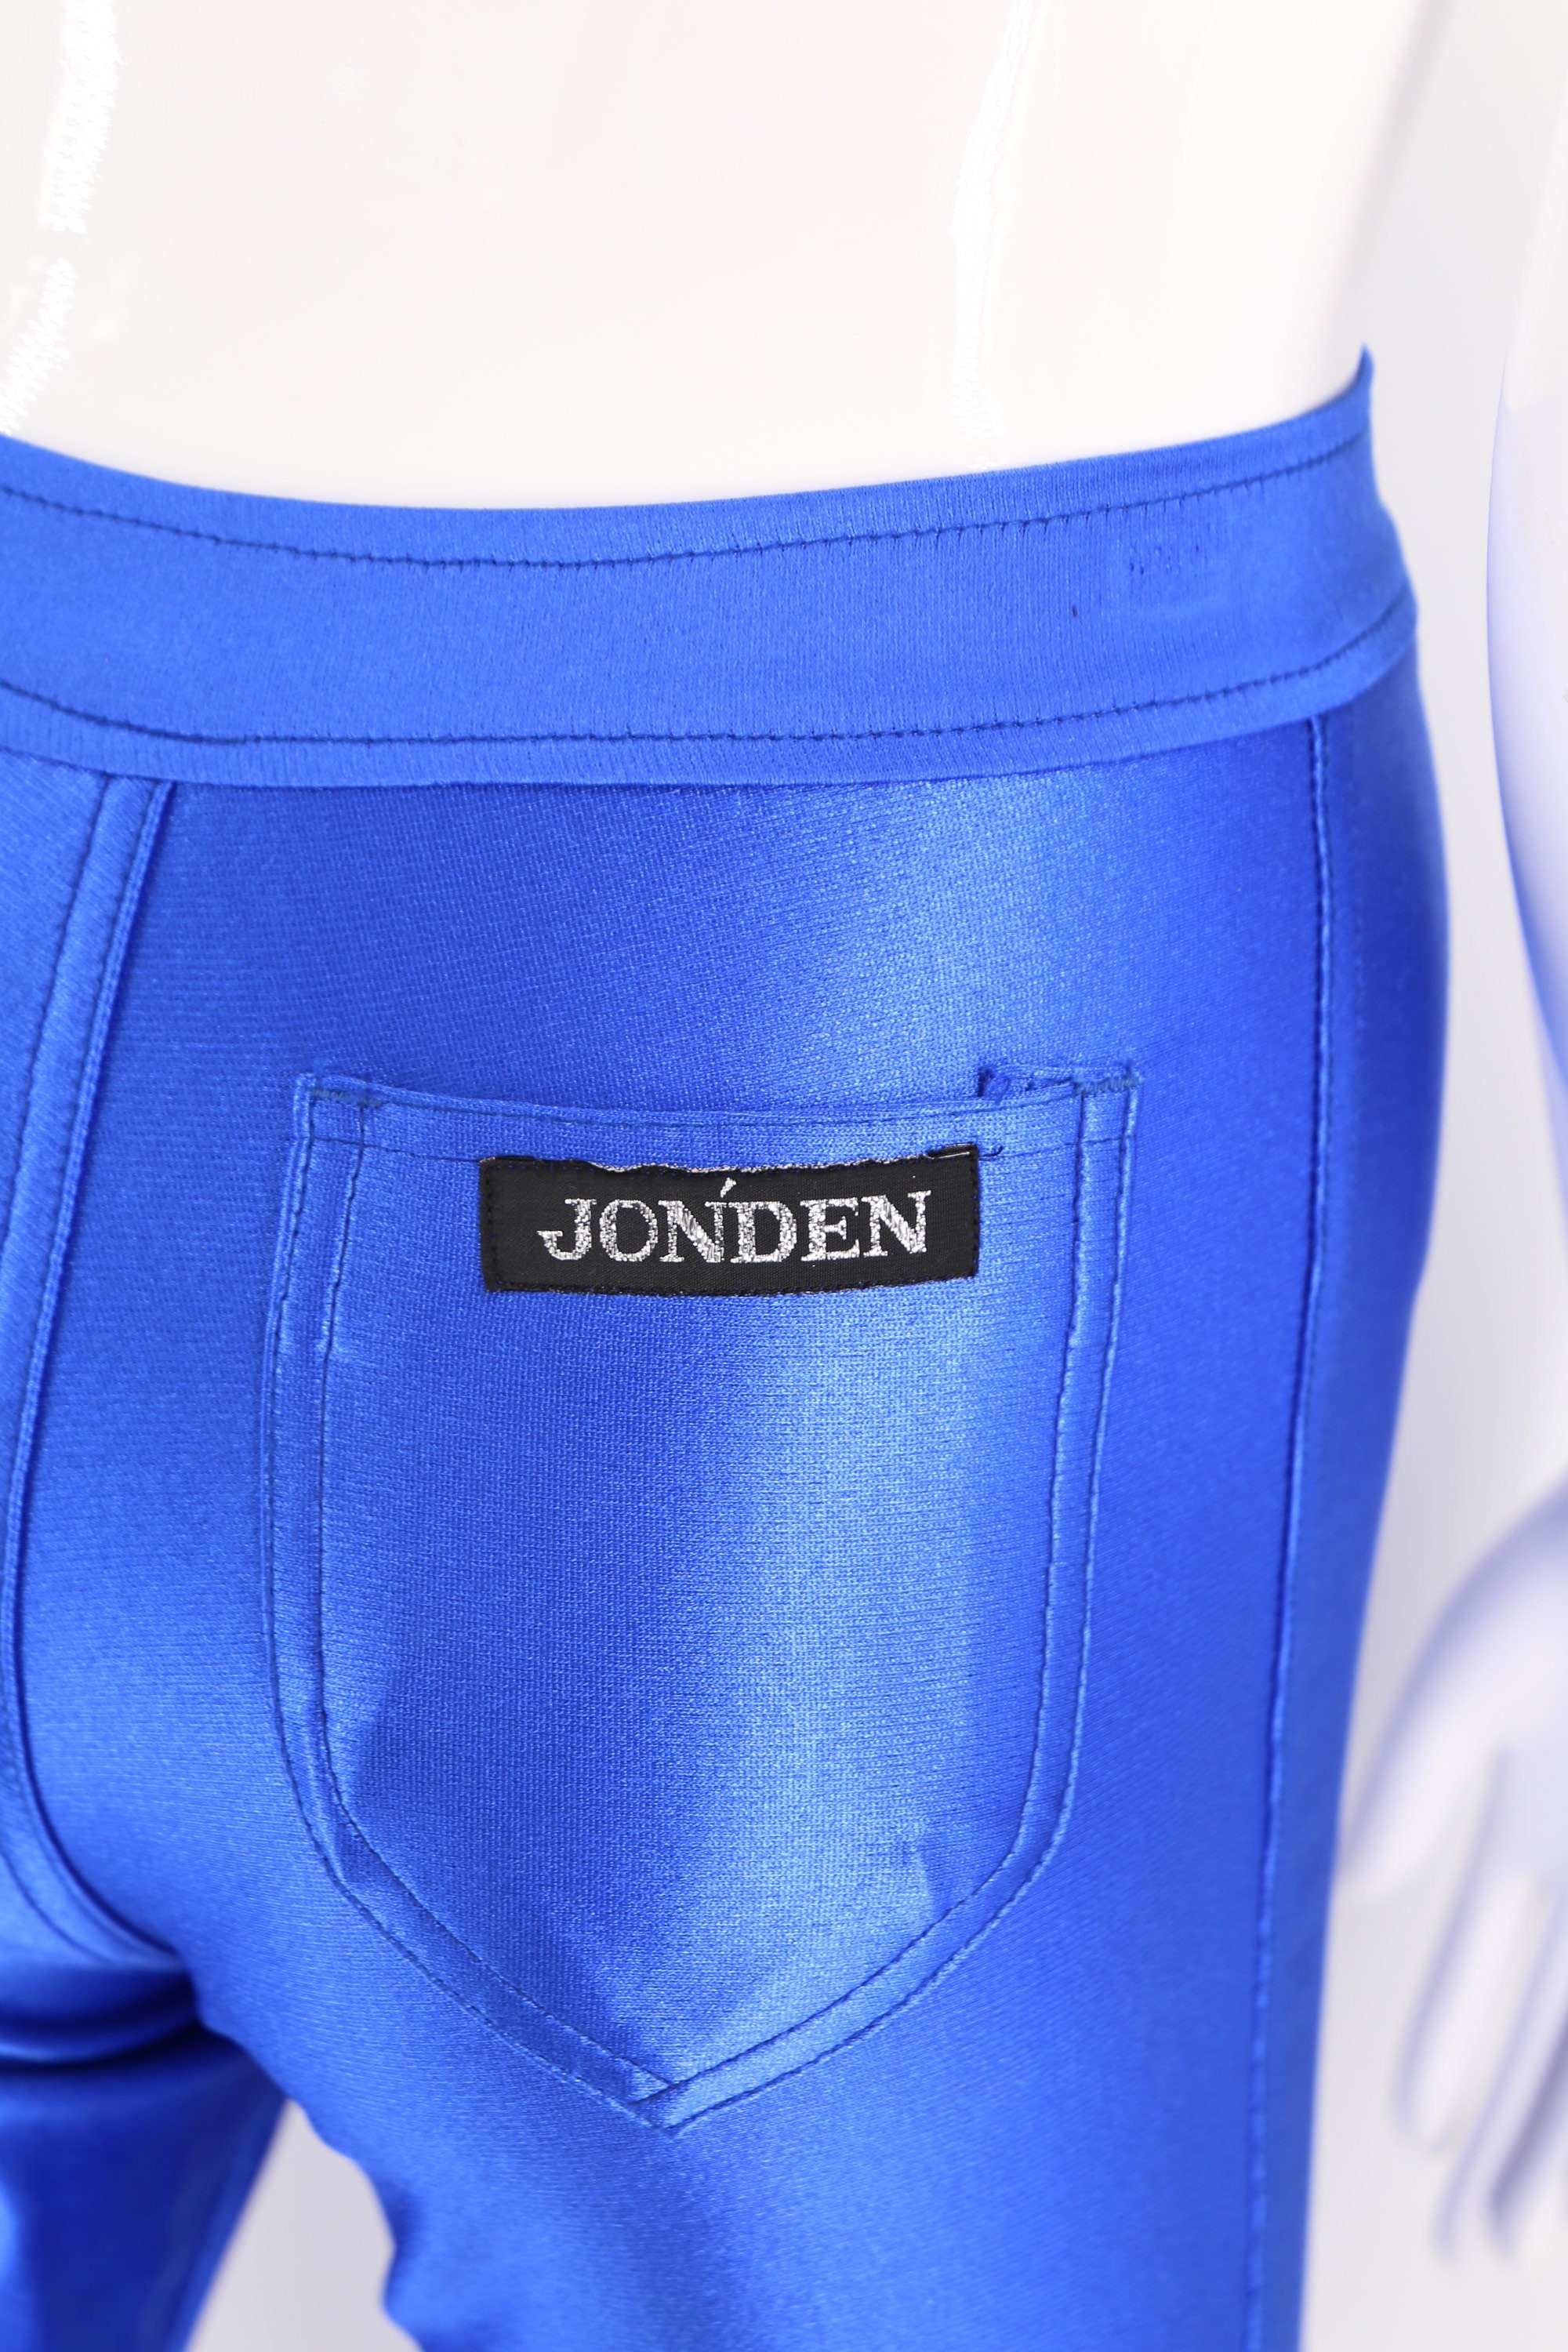 70s electric blue JONDEN original spandex disco pants S / vintage 1970s  shiny skin tight leggings sz 3